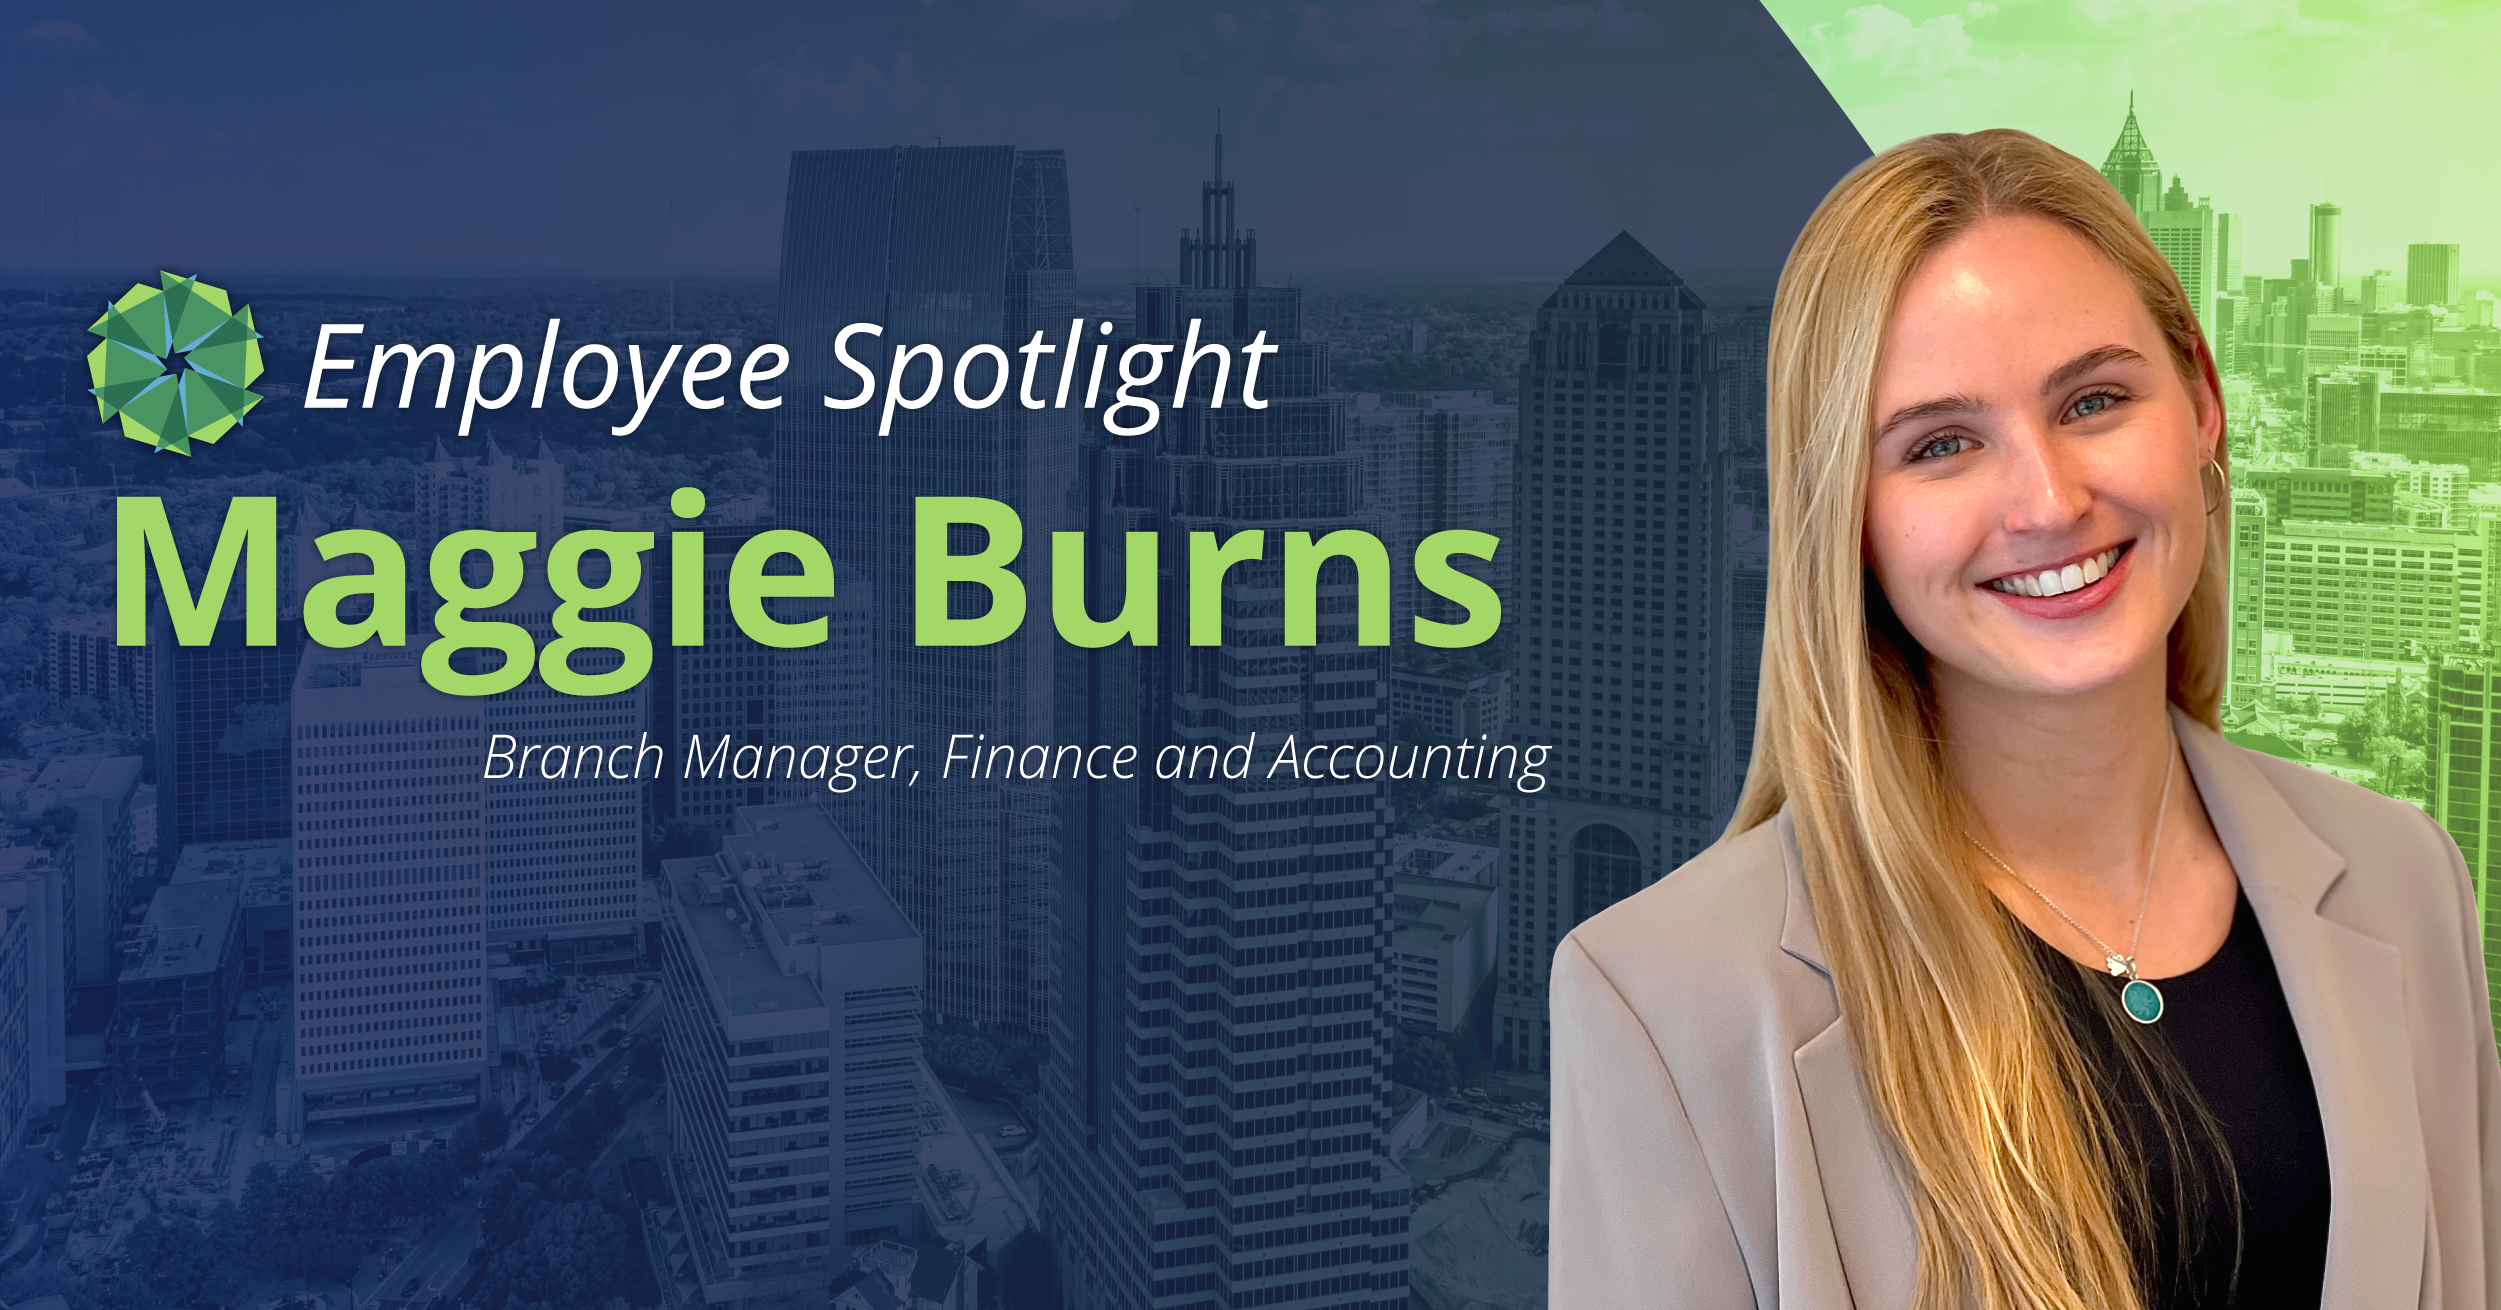 Employee Spotlight - Maggie Burns